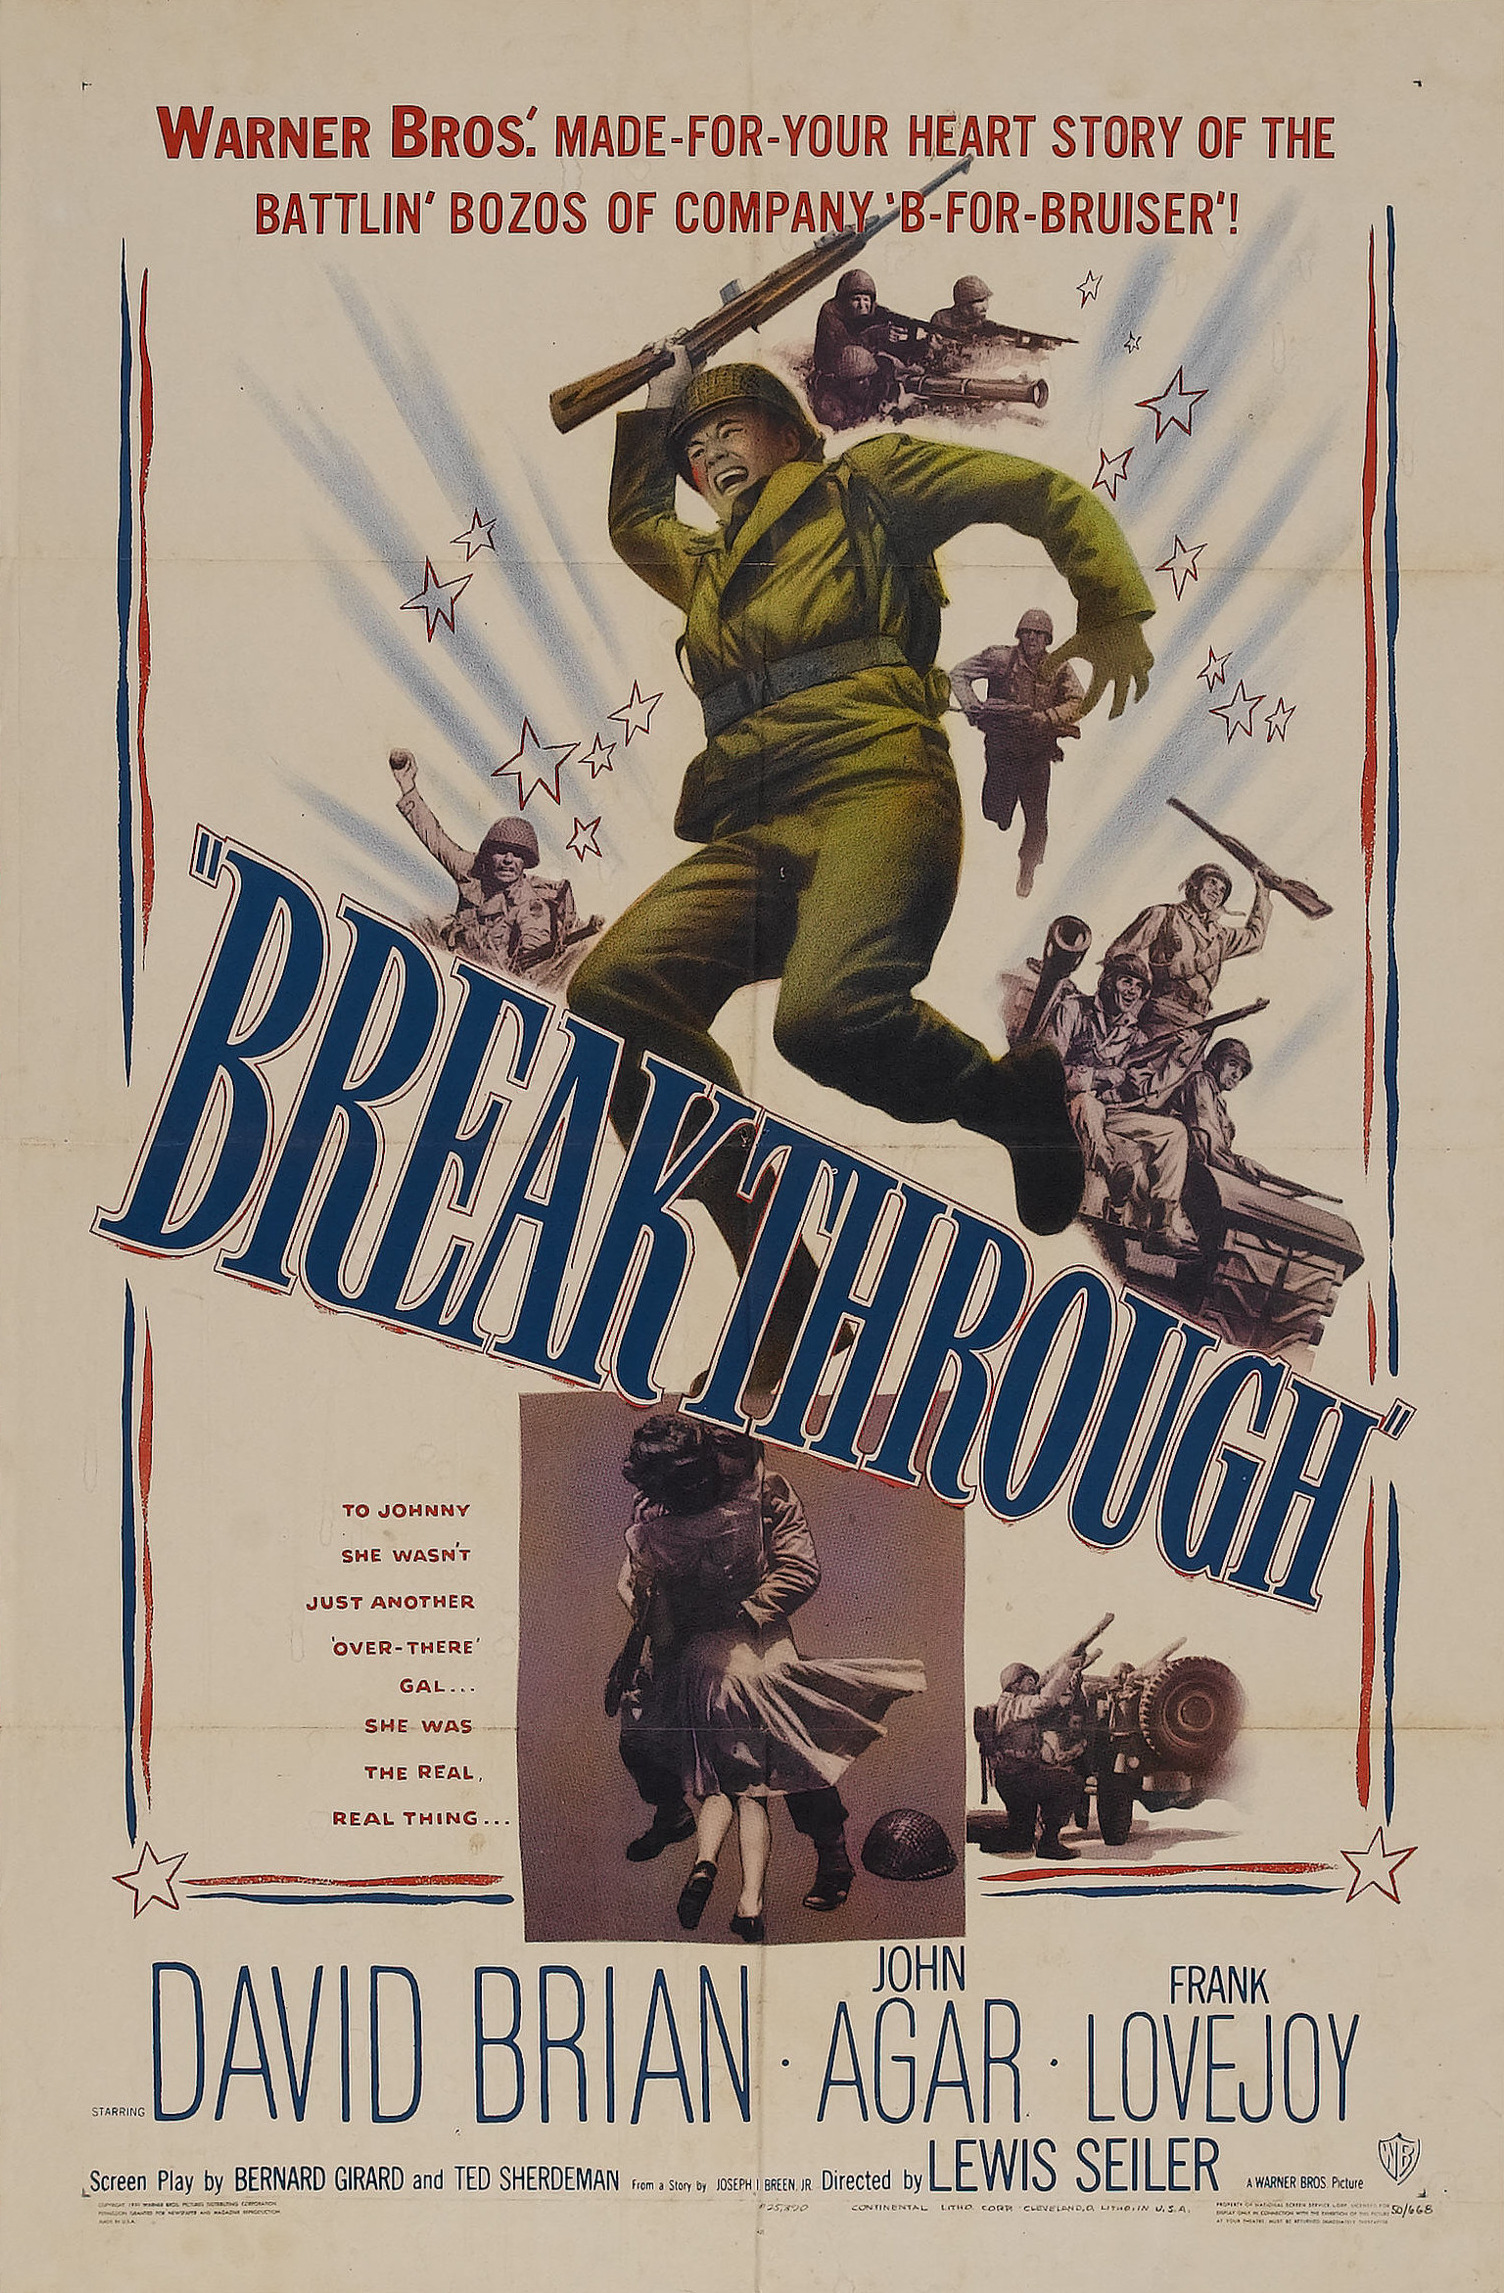 Mega Sized Movie Poster Image for Breakthrough (#1 of 2)